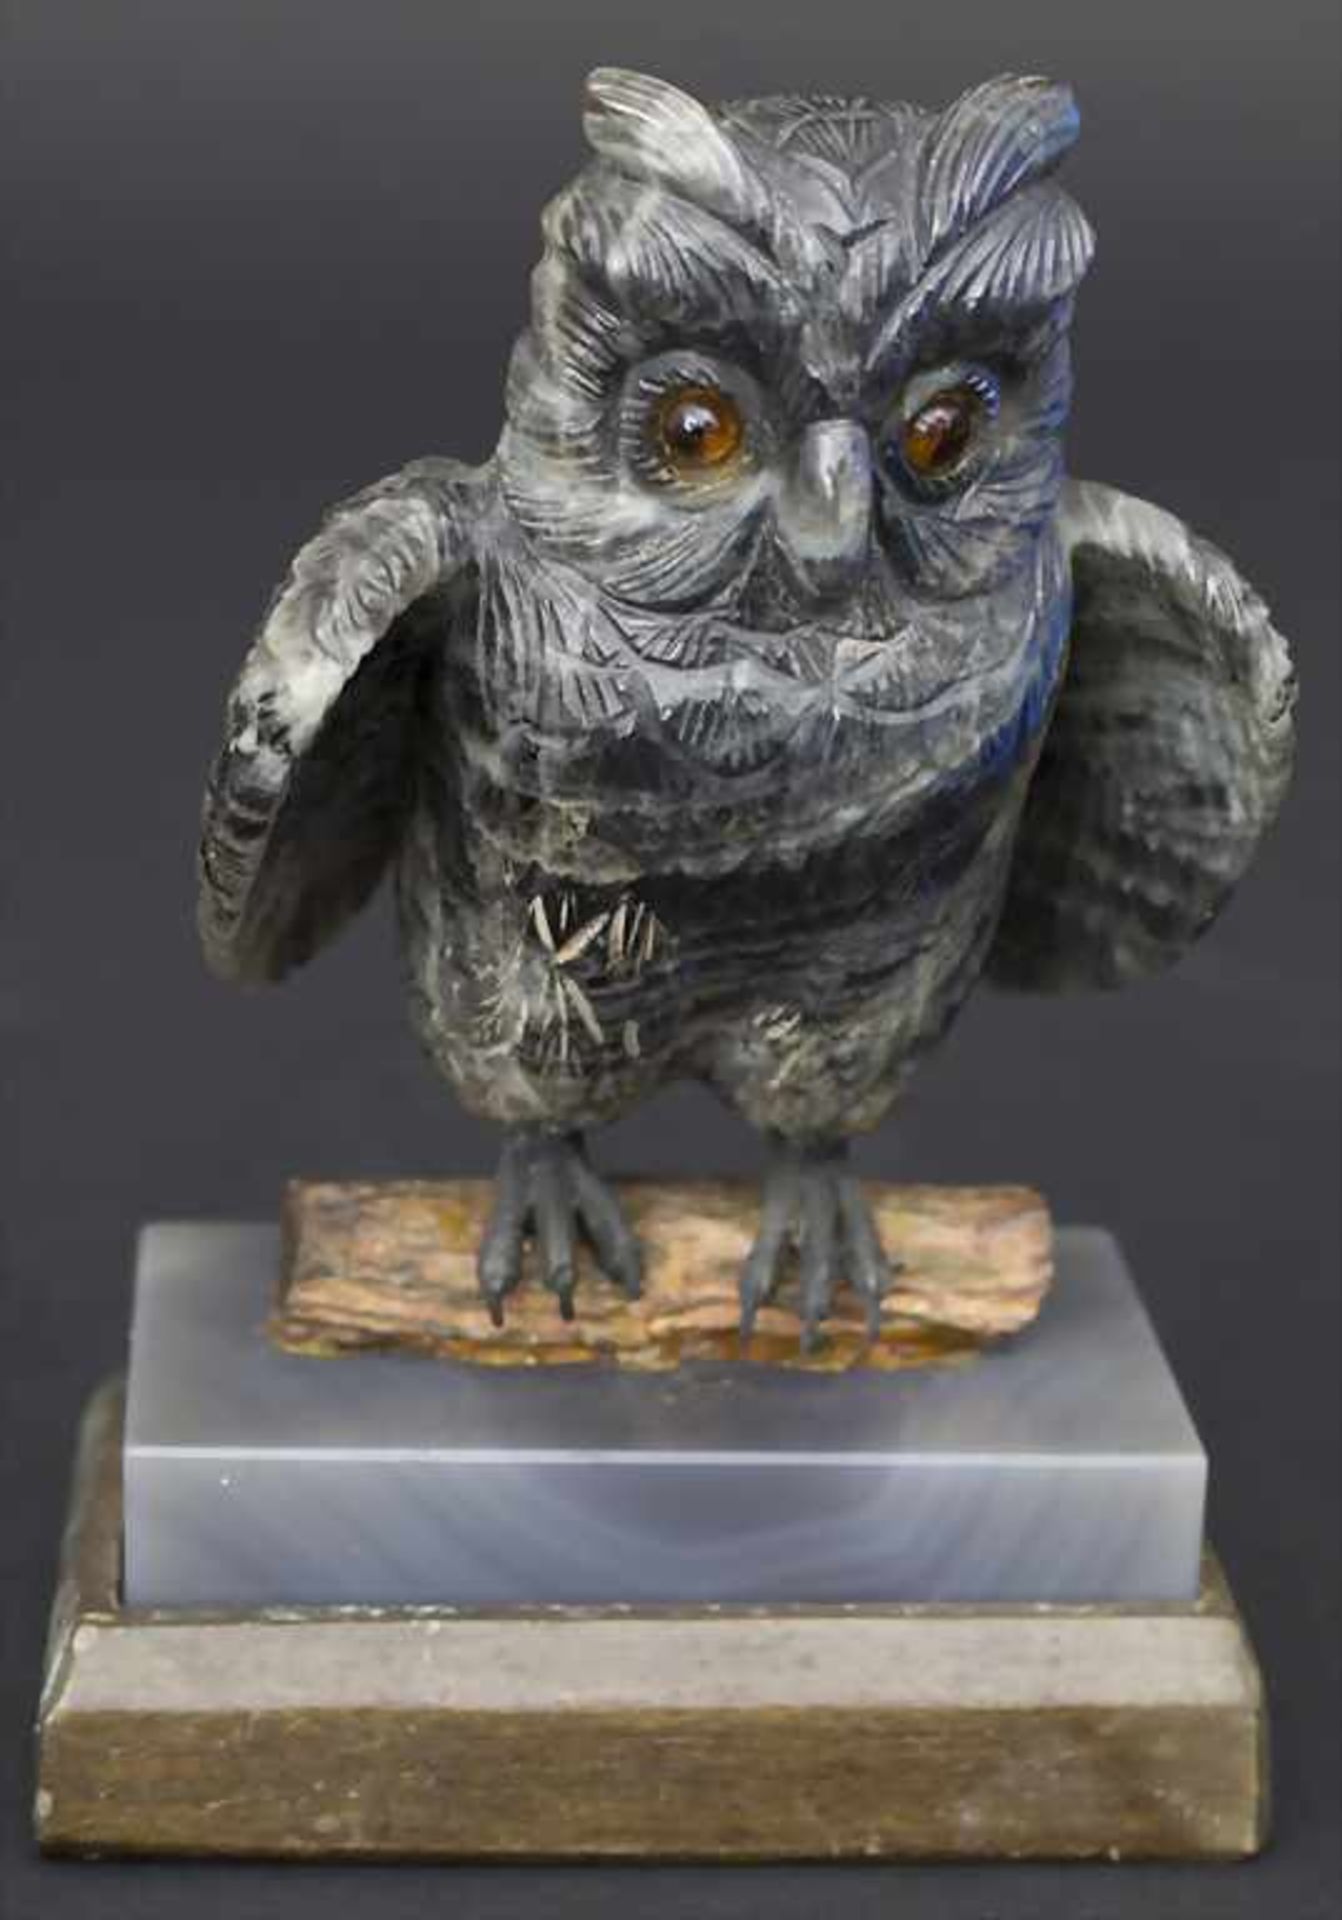 Labradorit-Schnitzerei 'Eule' / A labradorite carving 'Owl'Material: Labradorit, geschnitzt, auf